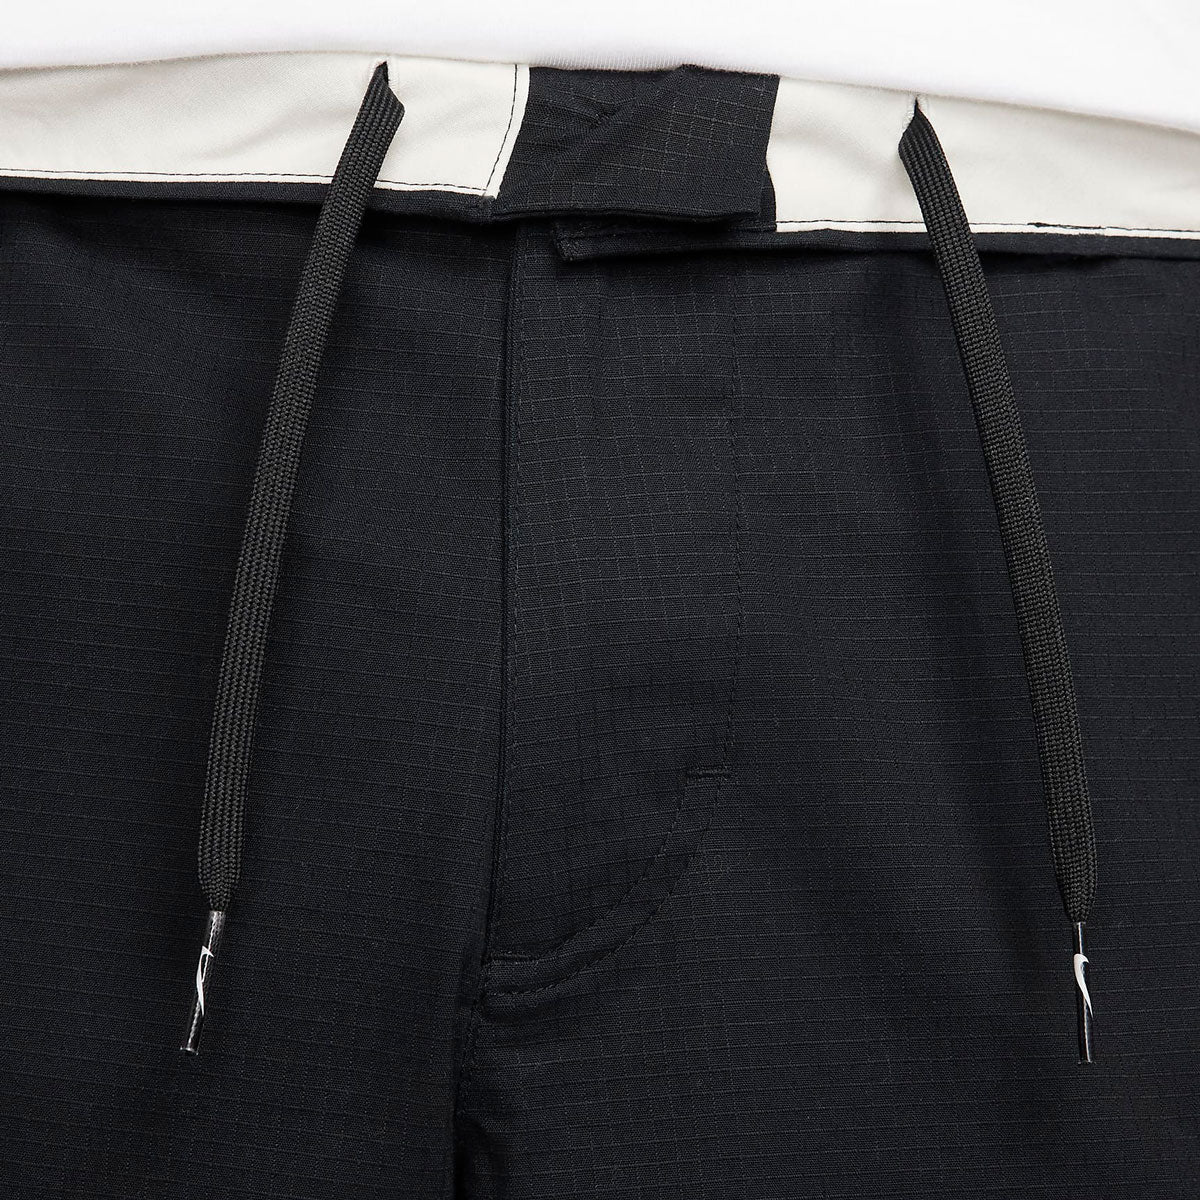 Nike SB Kearny Cargo Pants - Black image 4